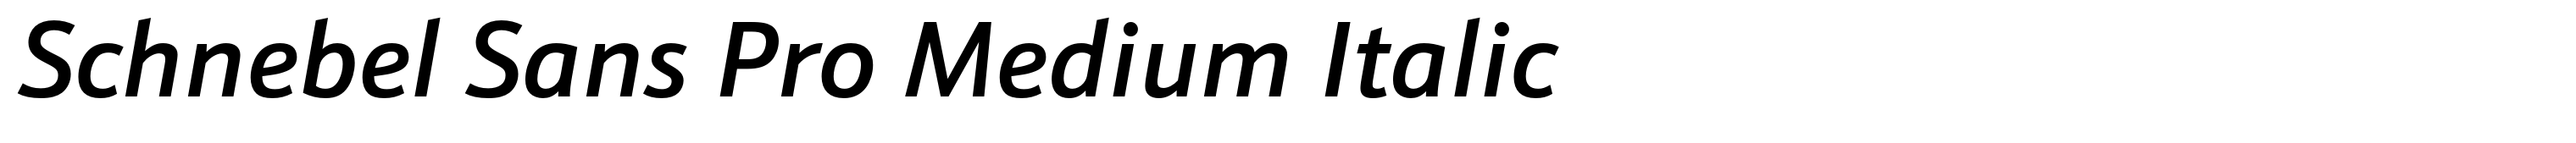 Schnebel Sans Pro Medium Italic